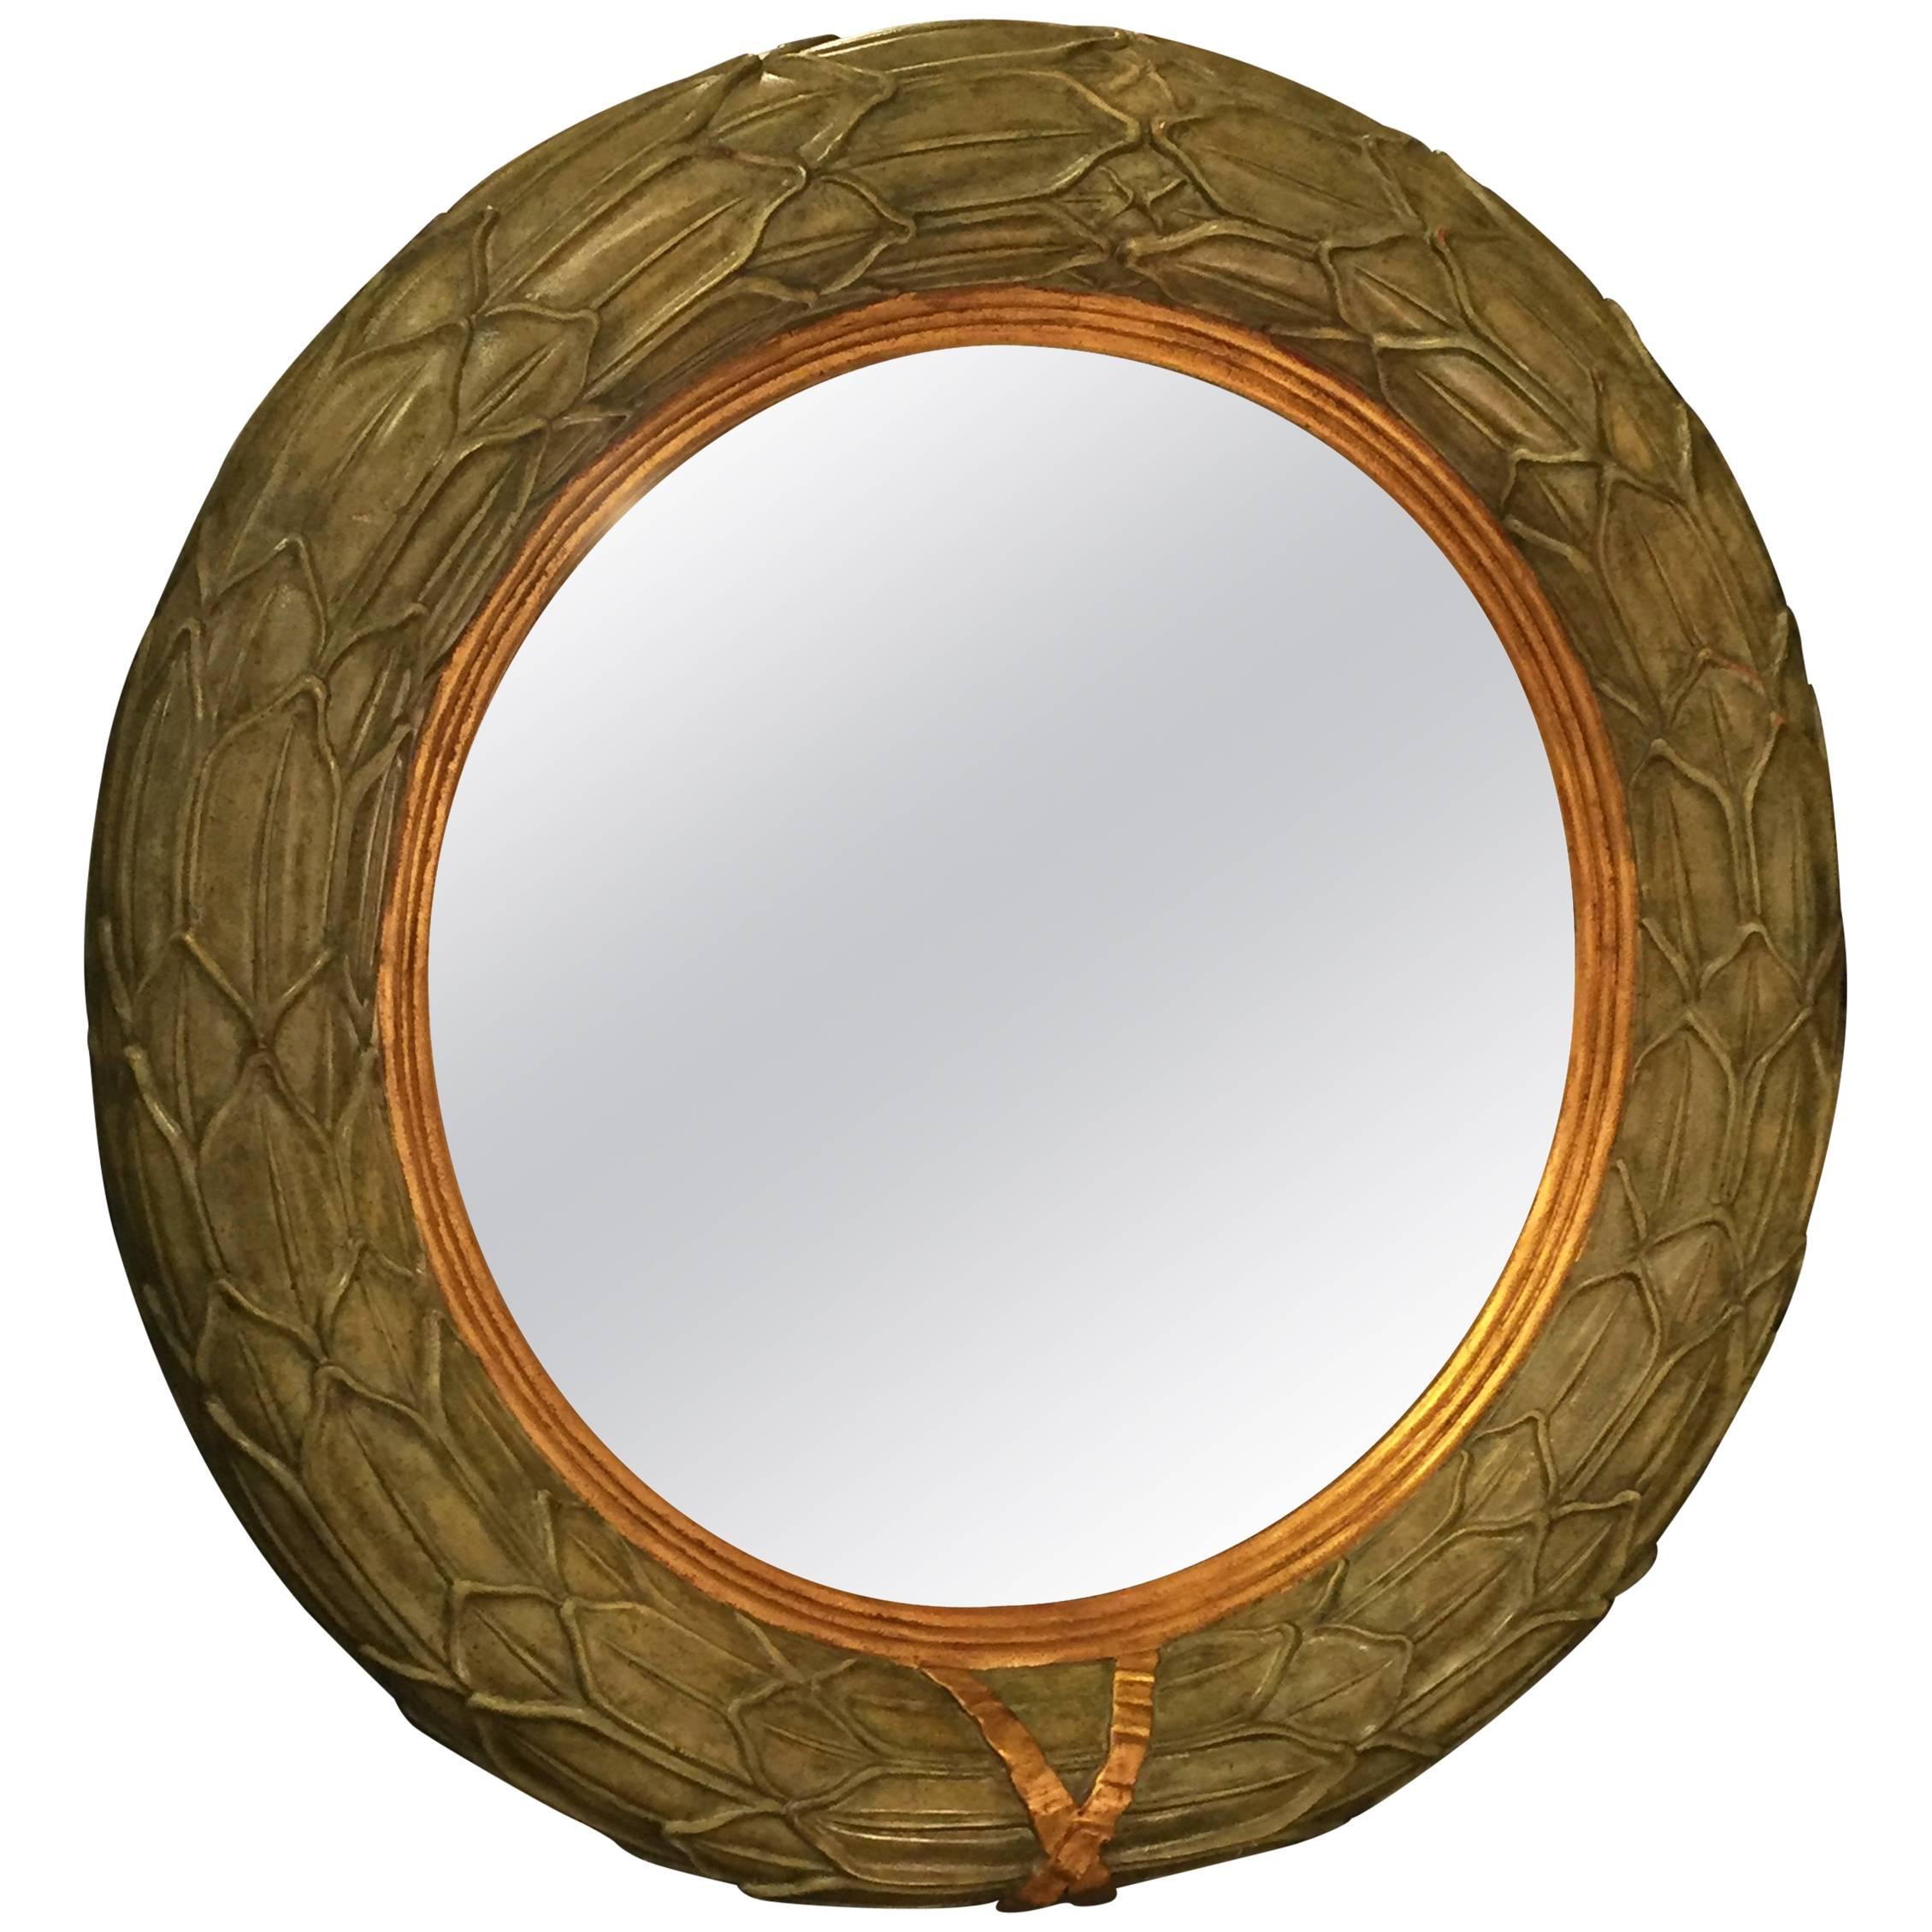 Stunning Maitland Smith Round Convex Veridian Green Mirror